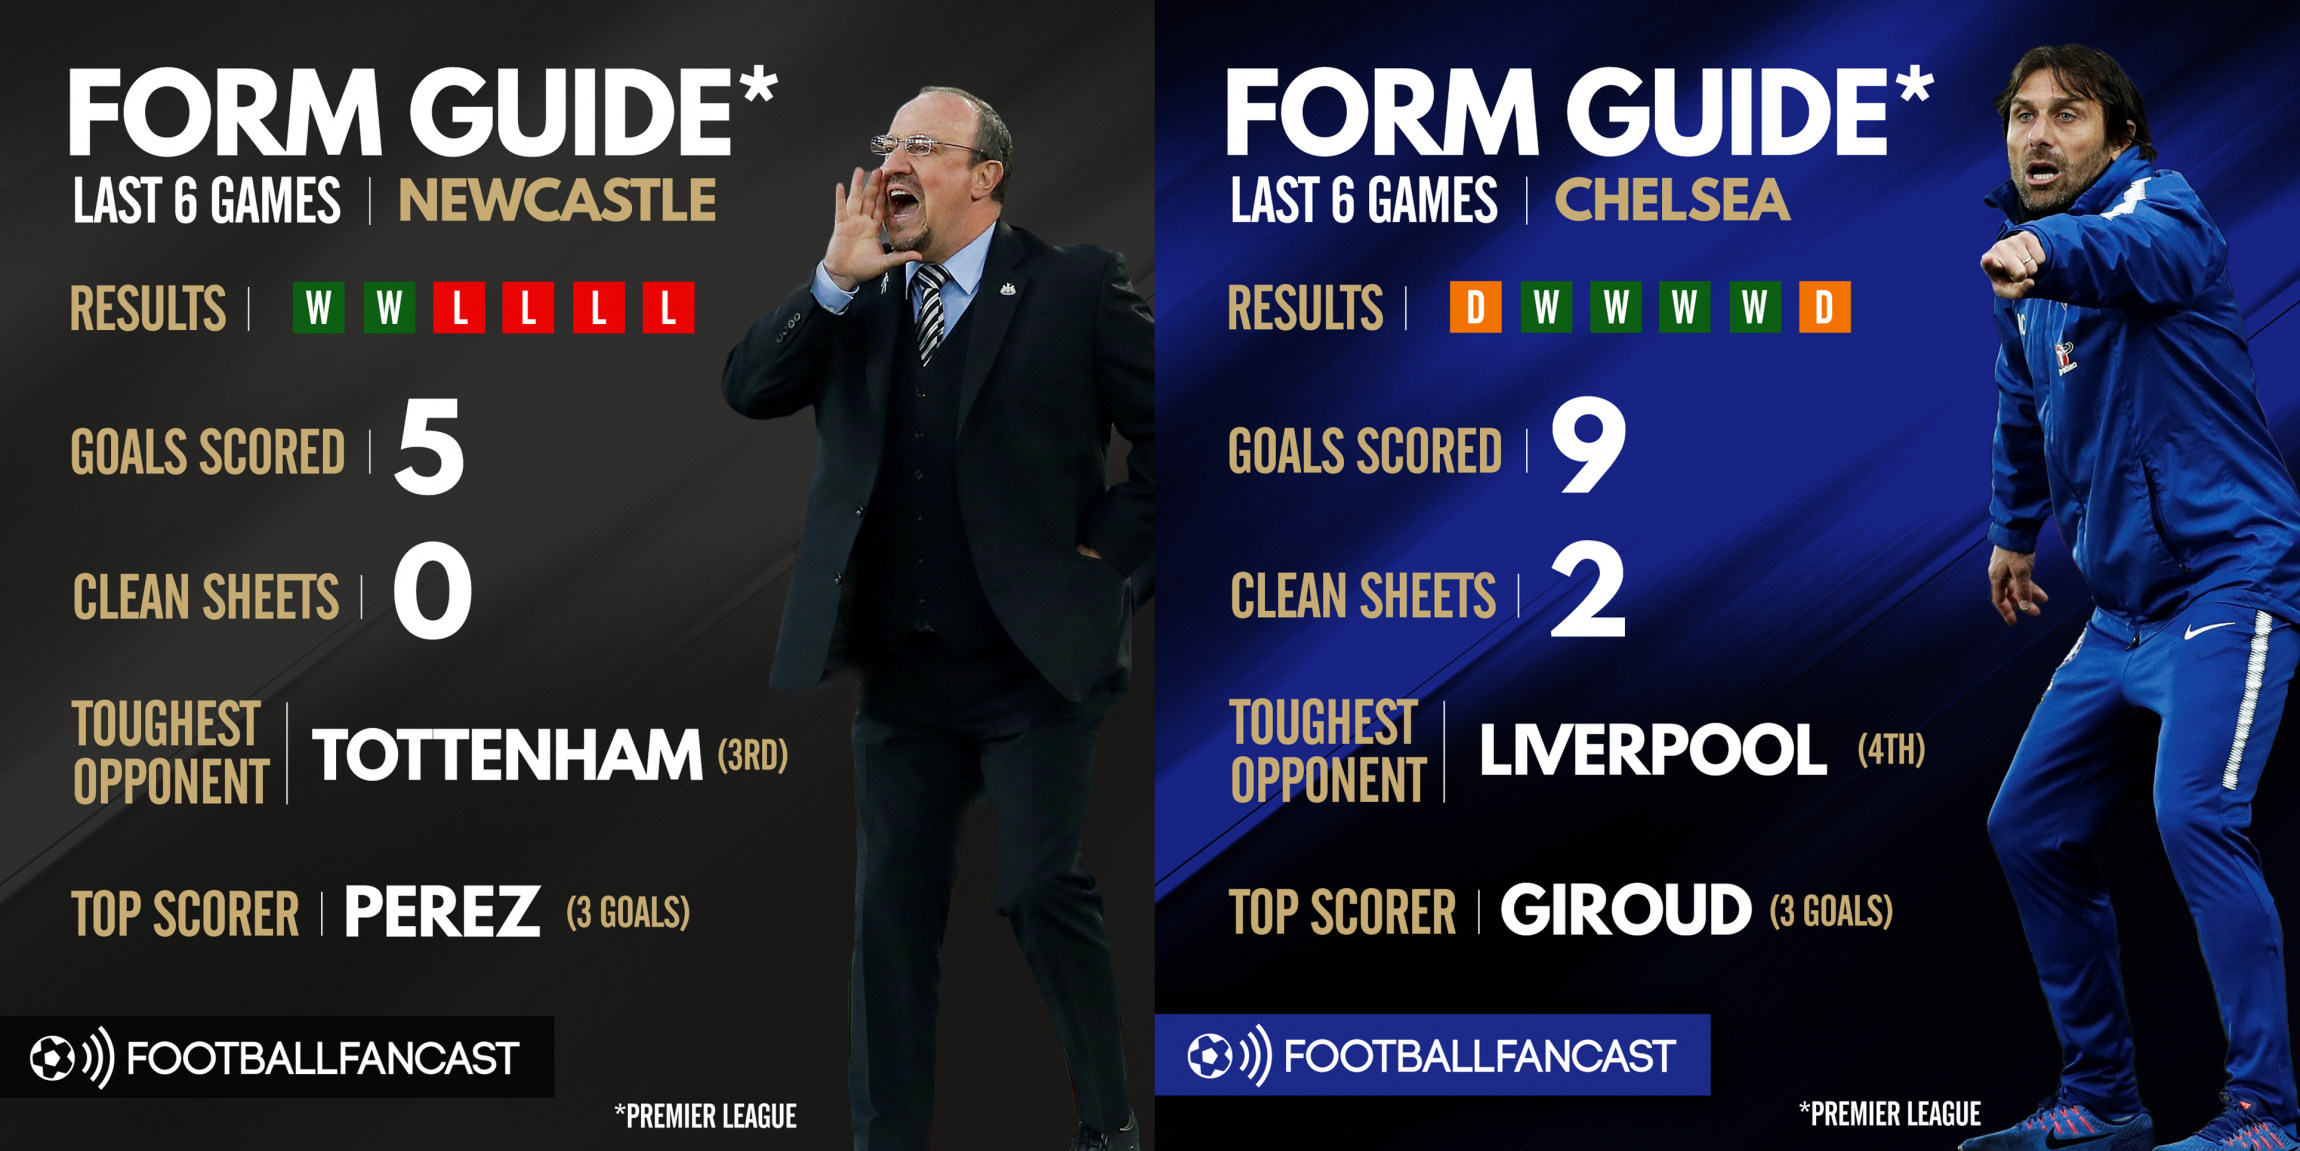 Newcastle vs Chelsea - Form Guide